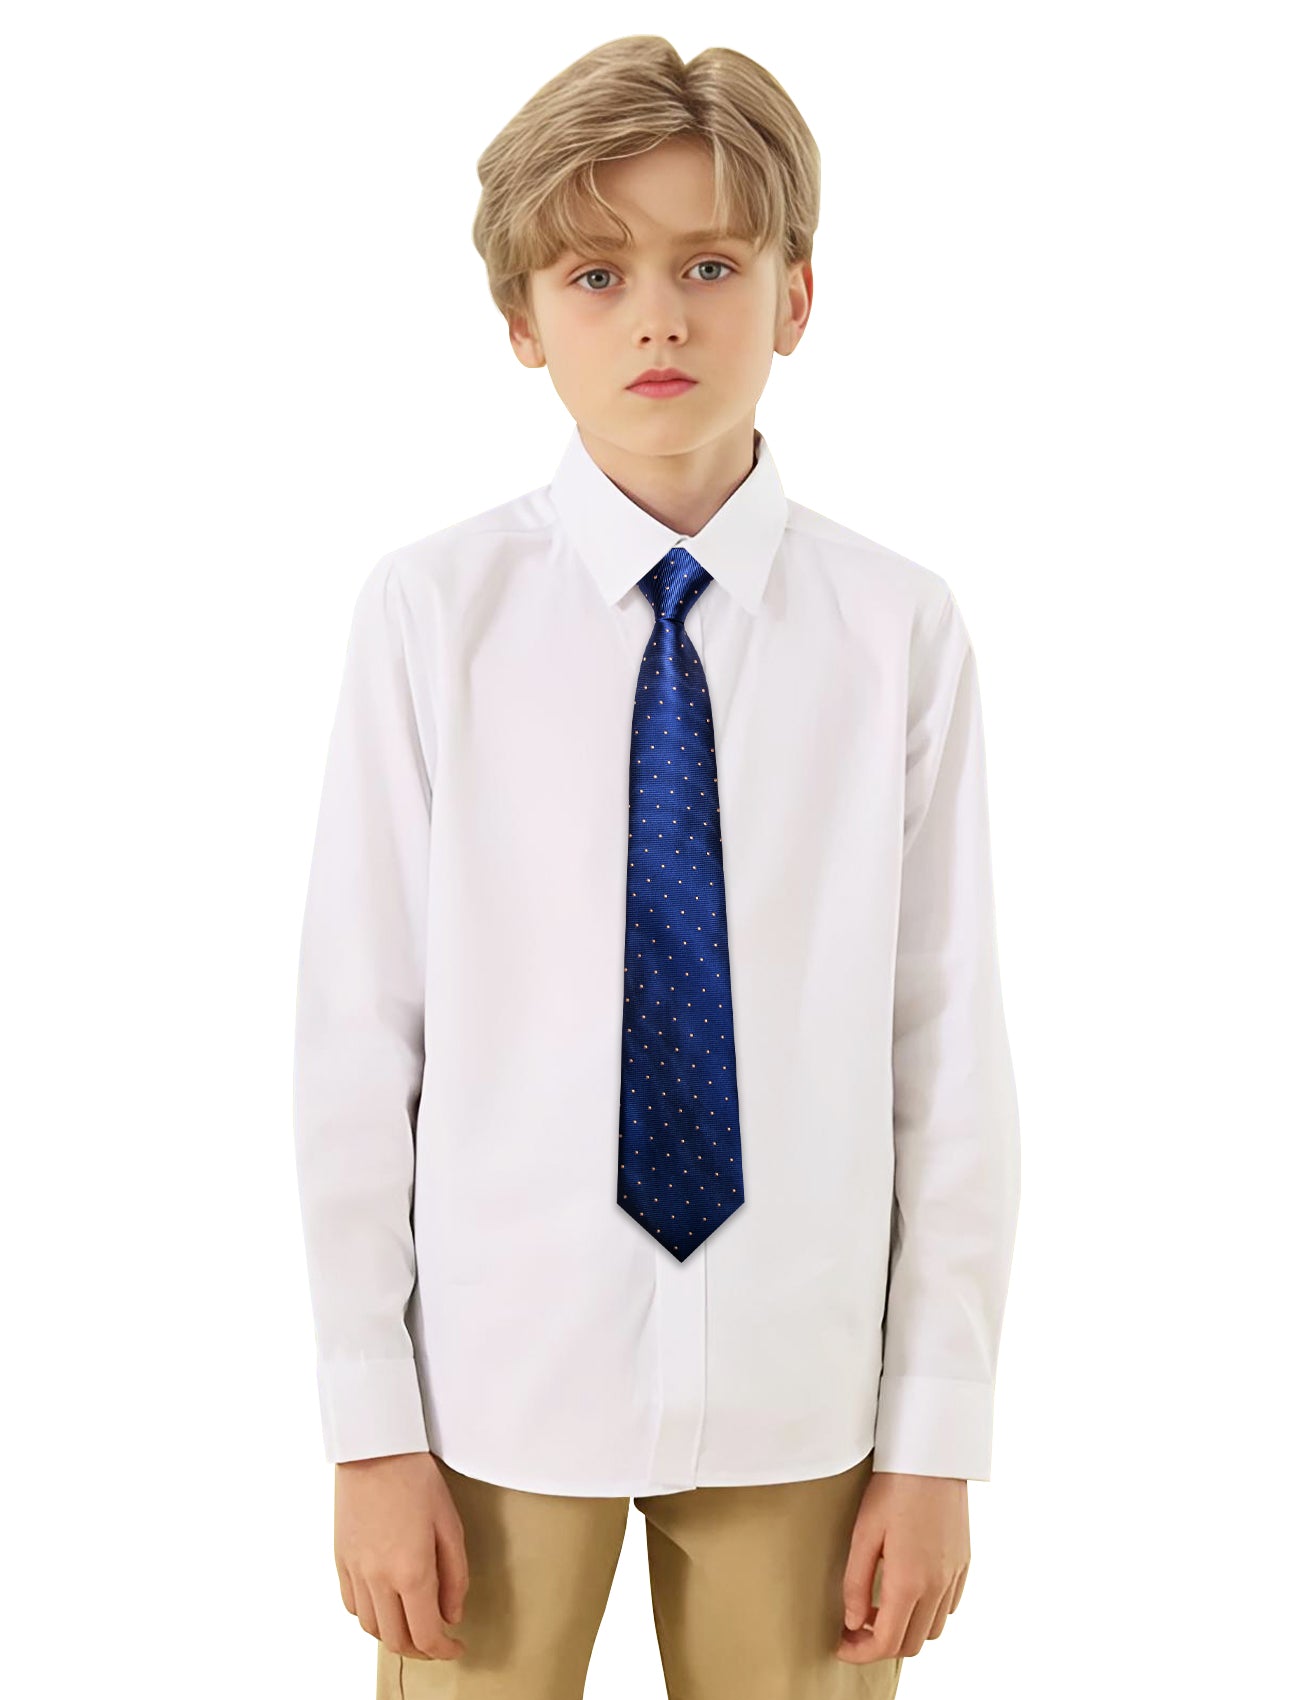 Barry.wang Kids Tie Navy Blue Plaid Children's Silk Tie Handkerchief Set